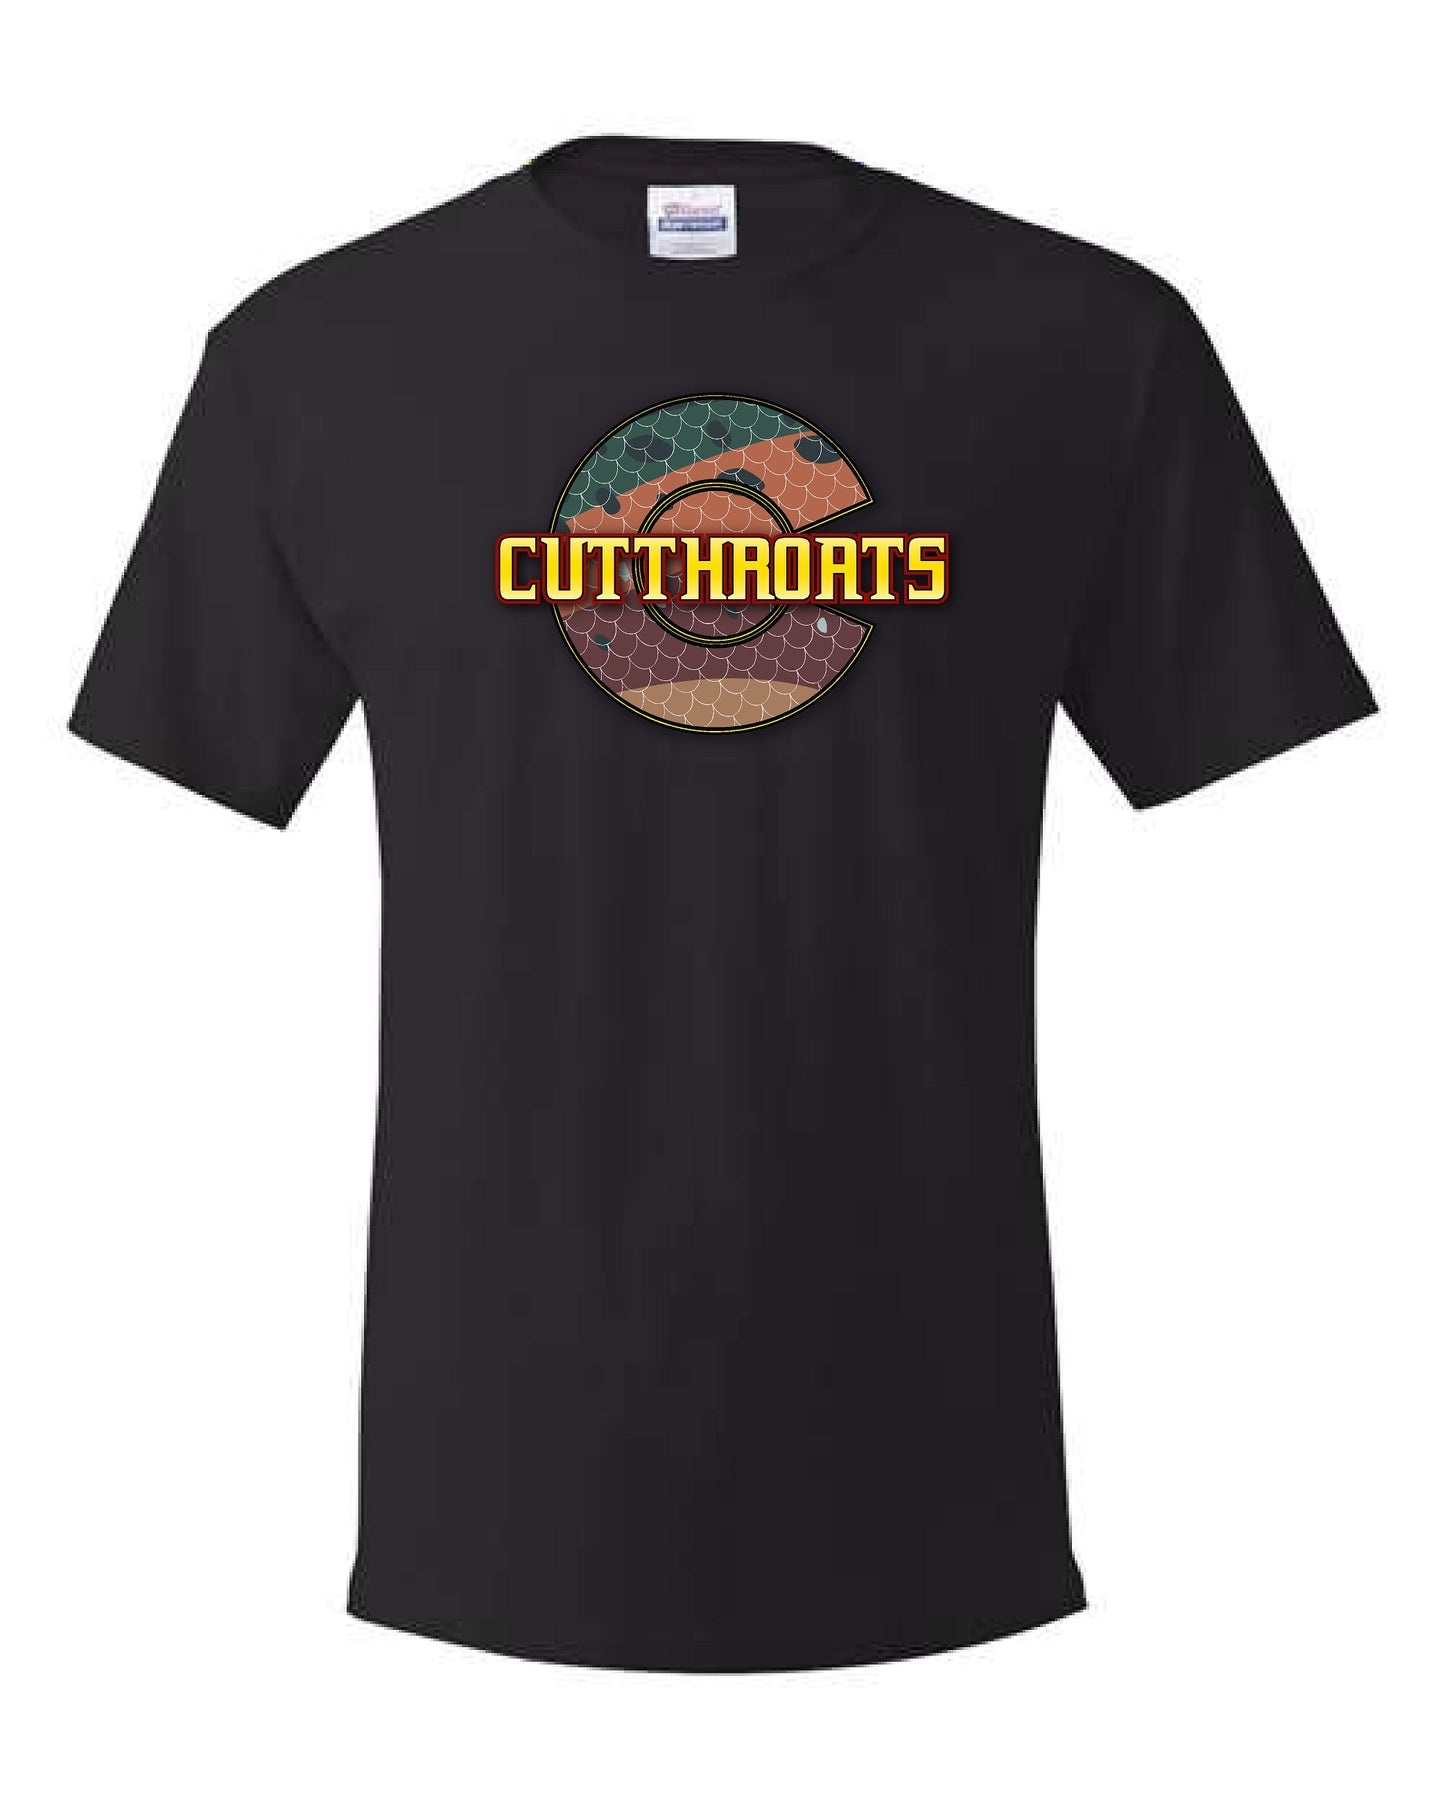 CUTTHROATS - Cotton feel or 50/50 Short Sleeve Tshirt Black